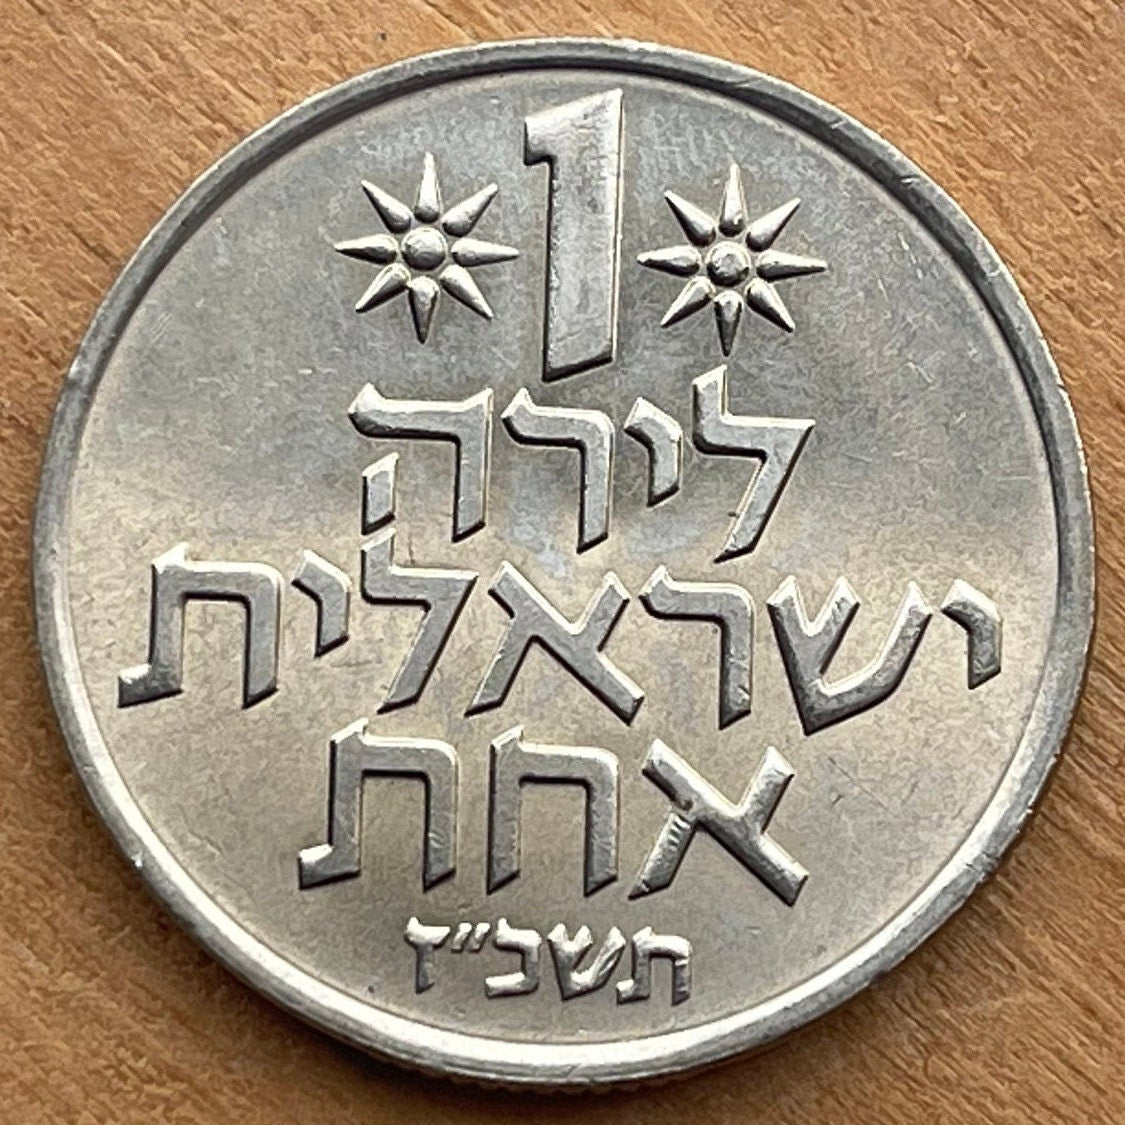 Pomegranates & Two Stars of 8 Rays 1 Lira Israel Authentic Coin Money for Jewelry (Forbidden Fruit) (Rimonim) (Mystic) (Rosh Hashanah)